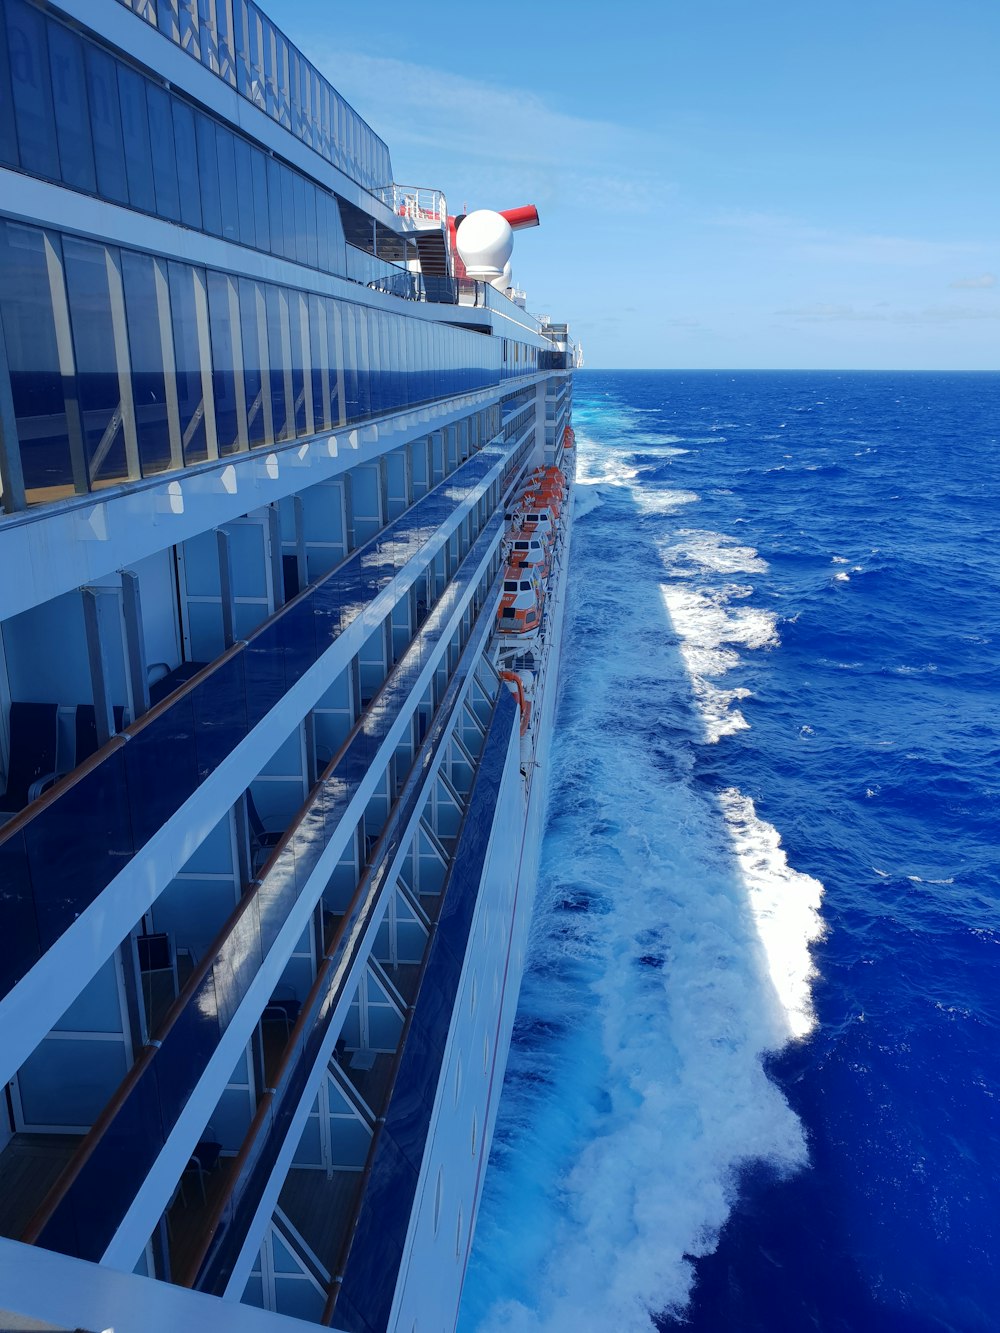 navio branco e azul no mar durante o dia